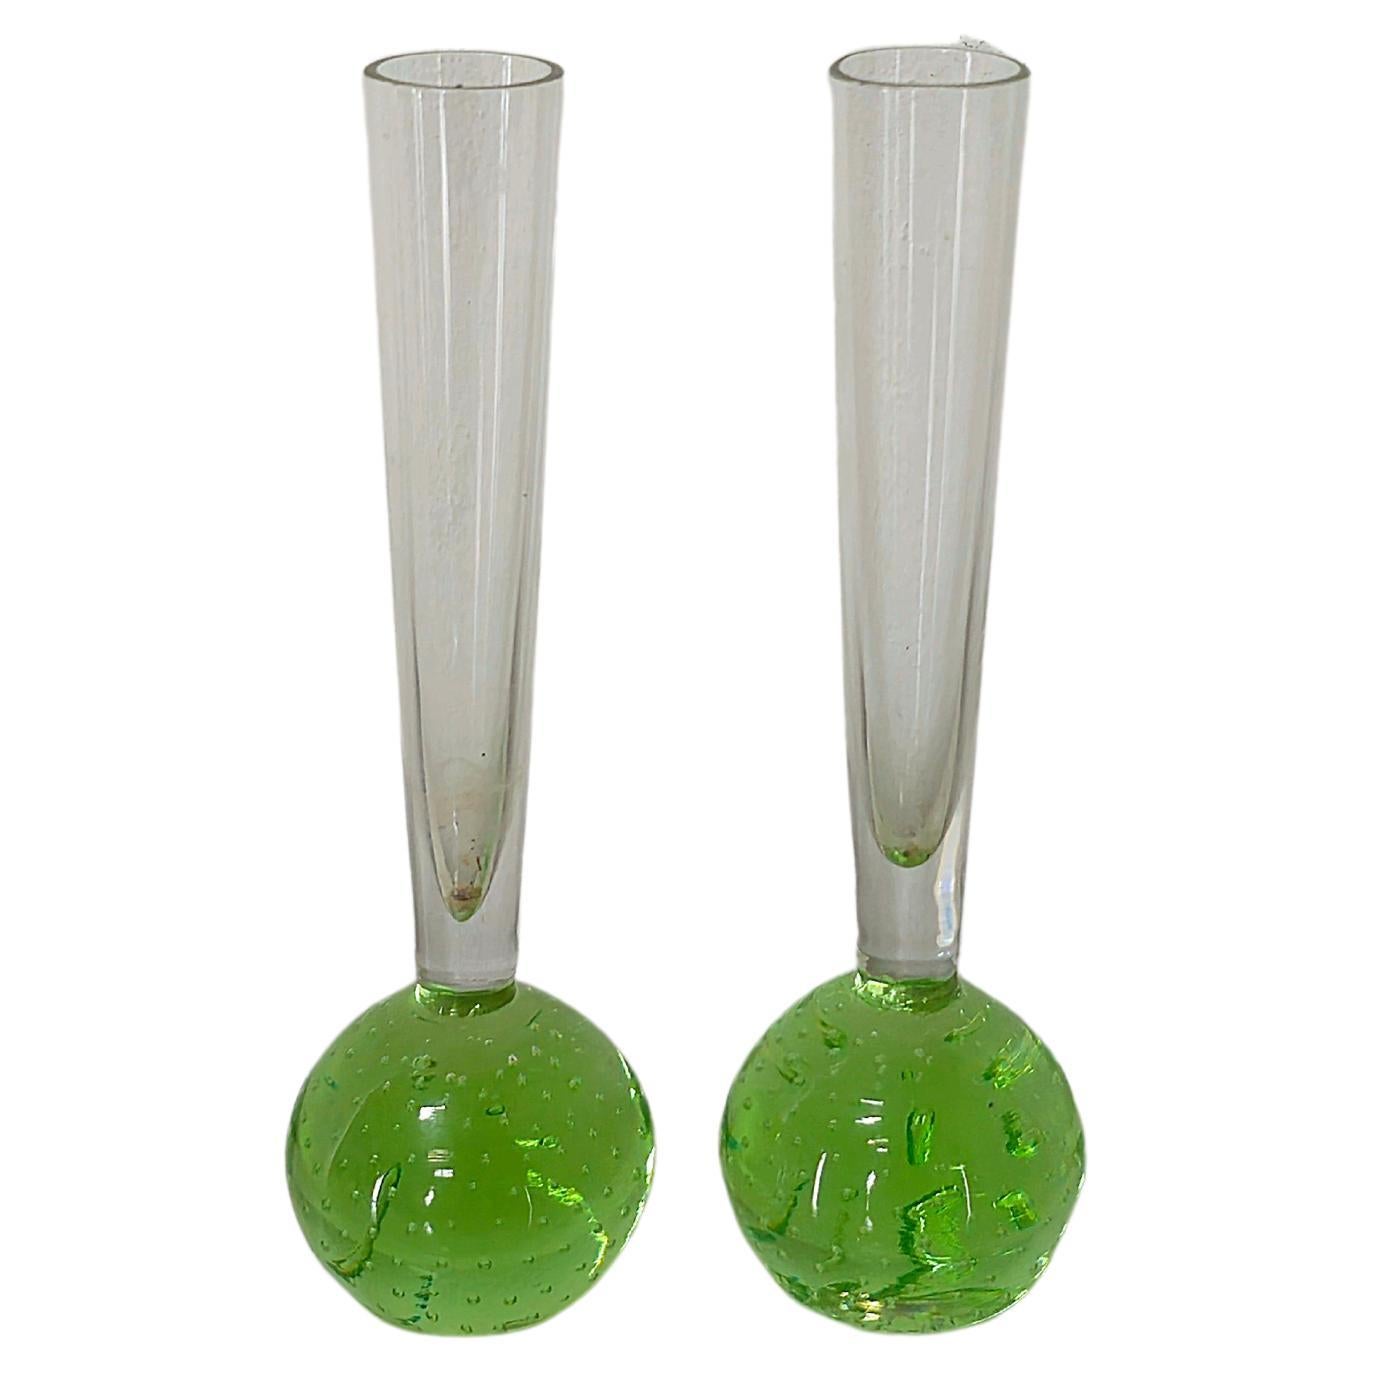 Decorative Objects Vases Murano Glass Midcentury Italian Design 1970s Set of 2